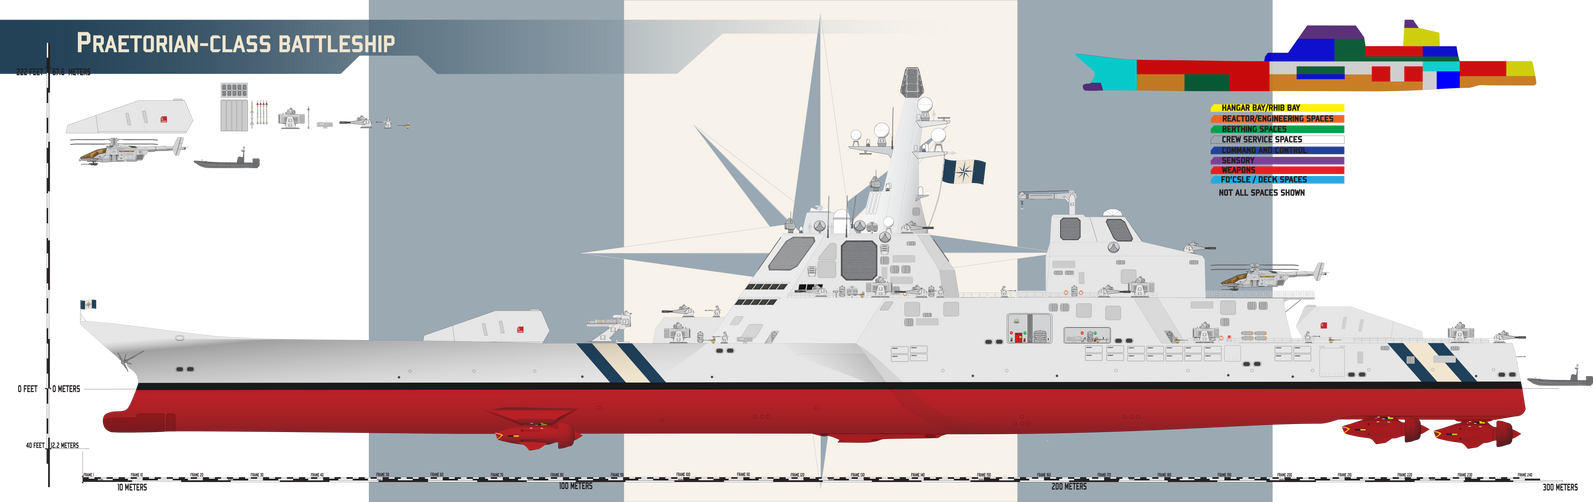 Praetorian-class Battleship [COMMISSION]